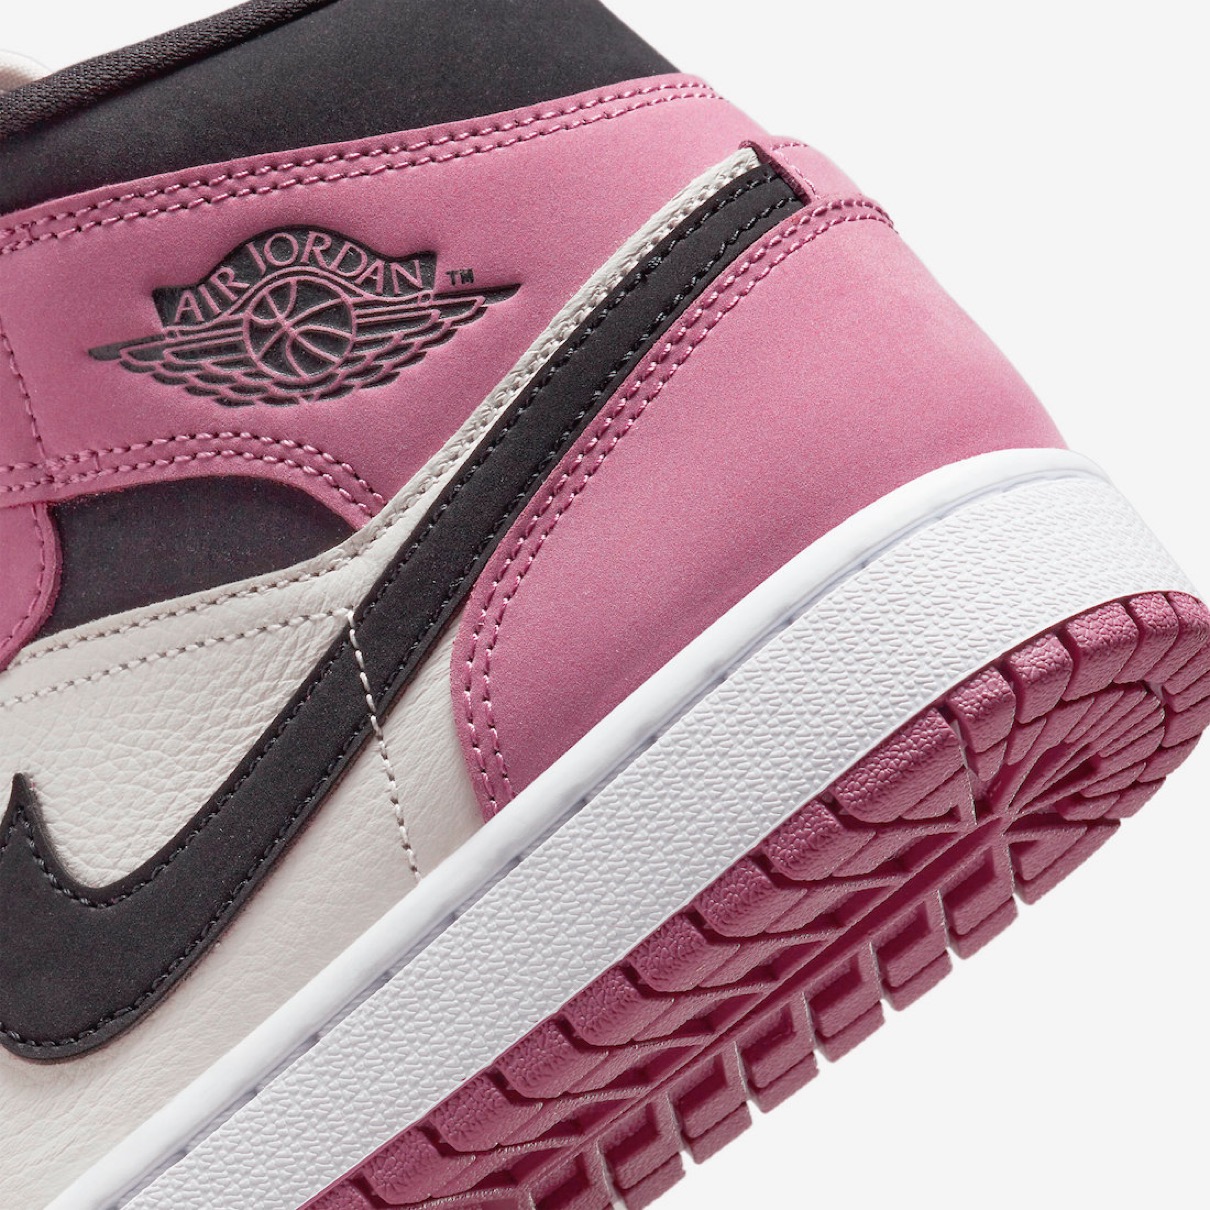 Nike WMNS Air Jordan 1 Mid "Berry Pink"